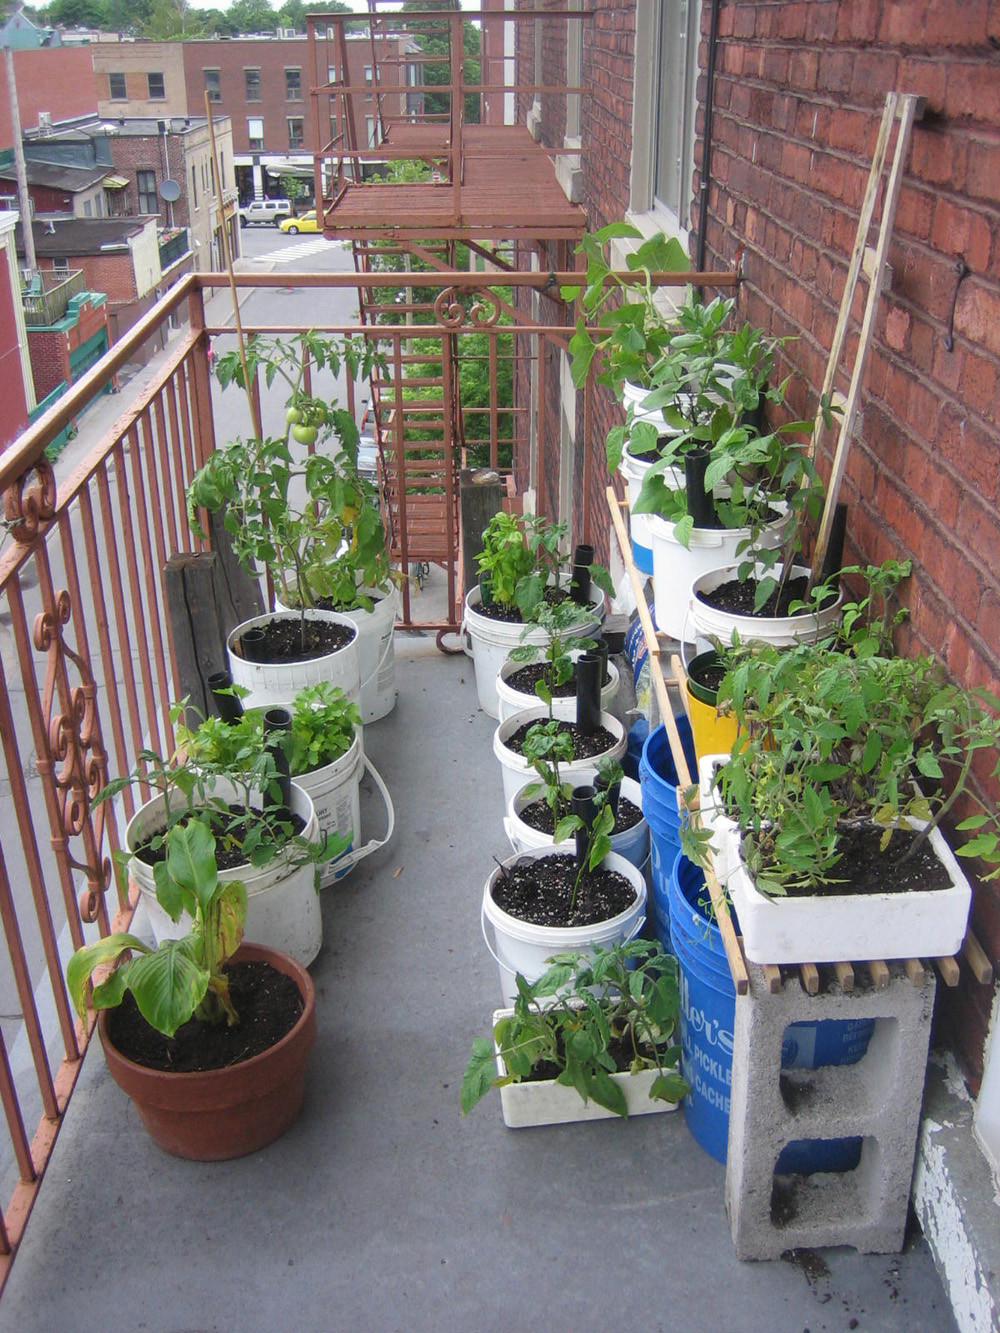 Best ideas about Balcony Garden Ideas
. Save or Pin balcony garden ideas Now.